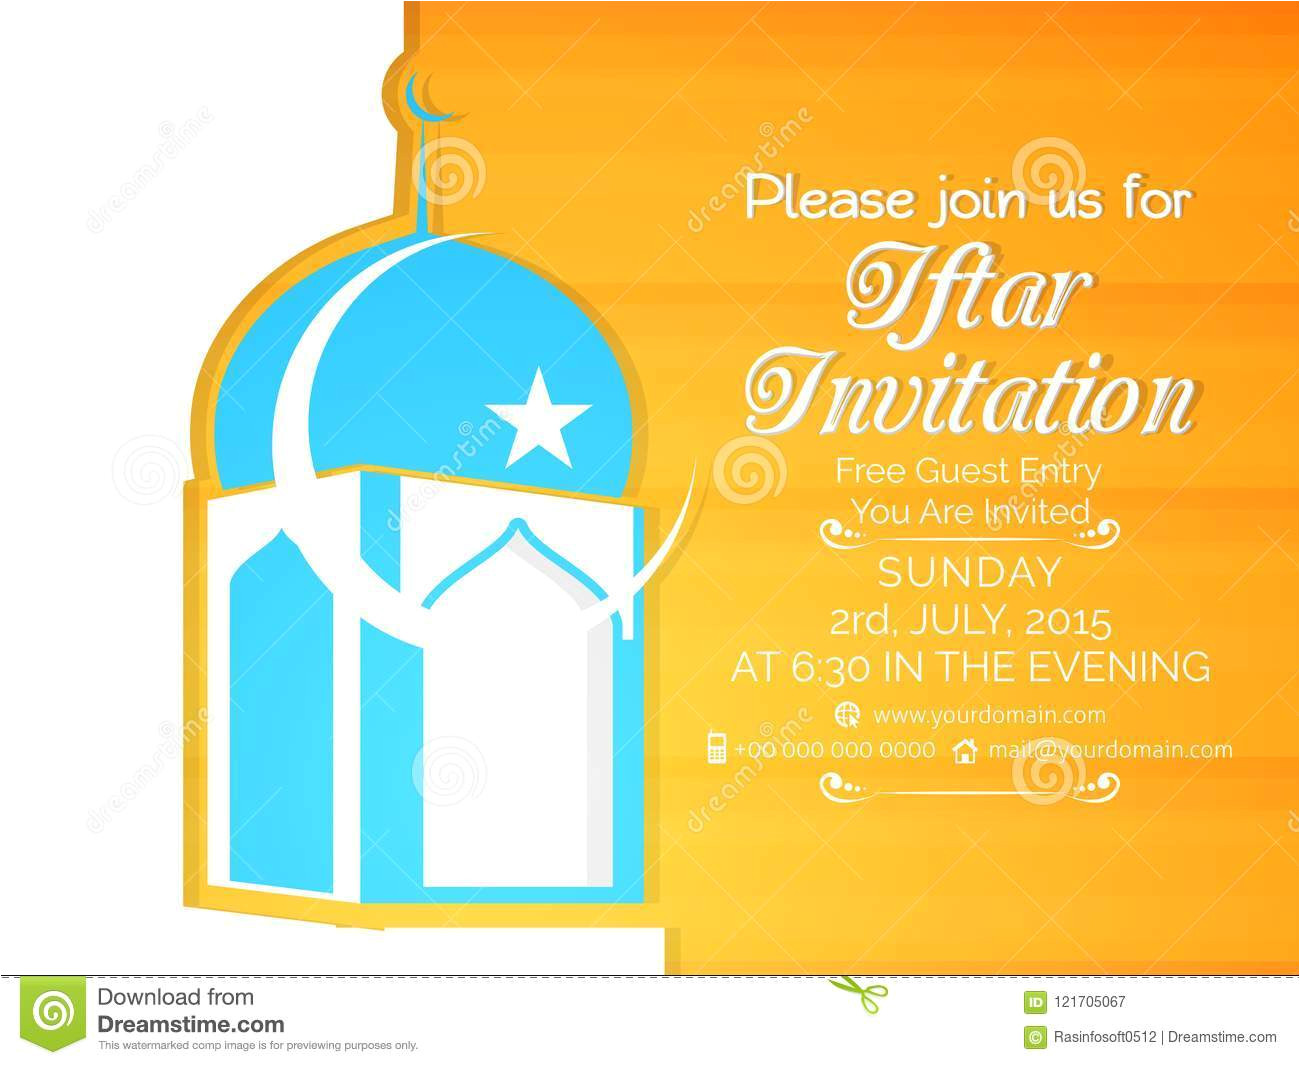 iftar invitation eid mubarak ramadan mubarak eid al fitr nice beautiful invitation poster eid iftar party 121705067 jpg